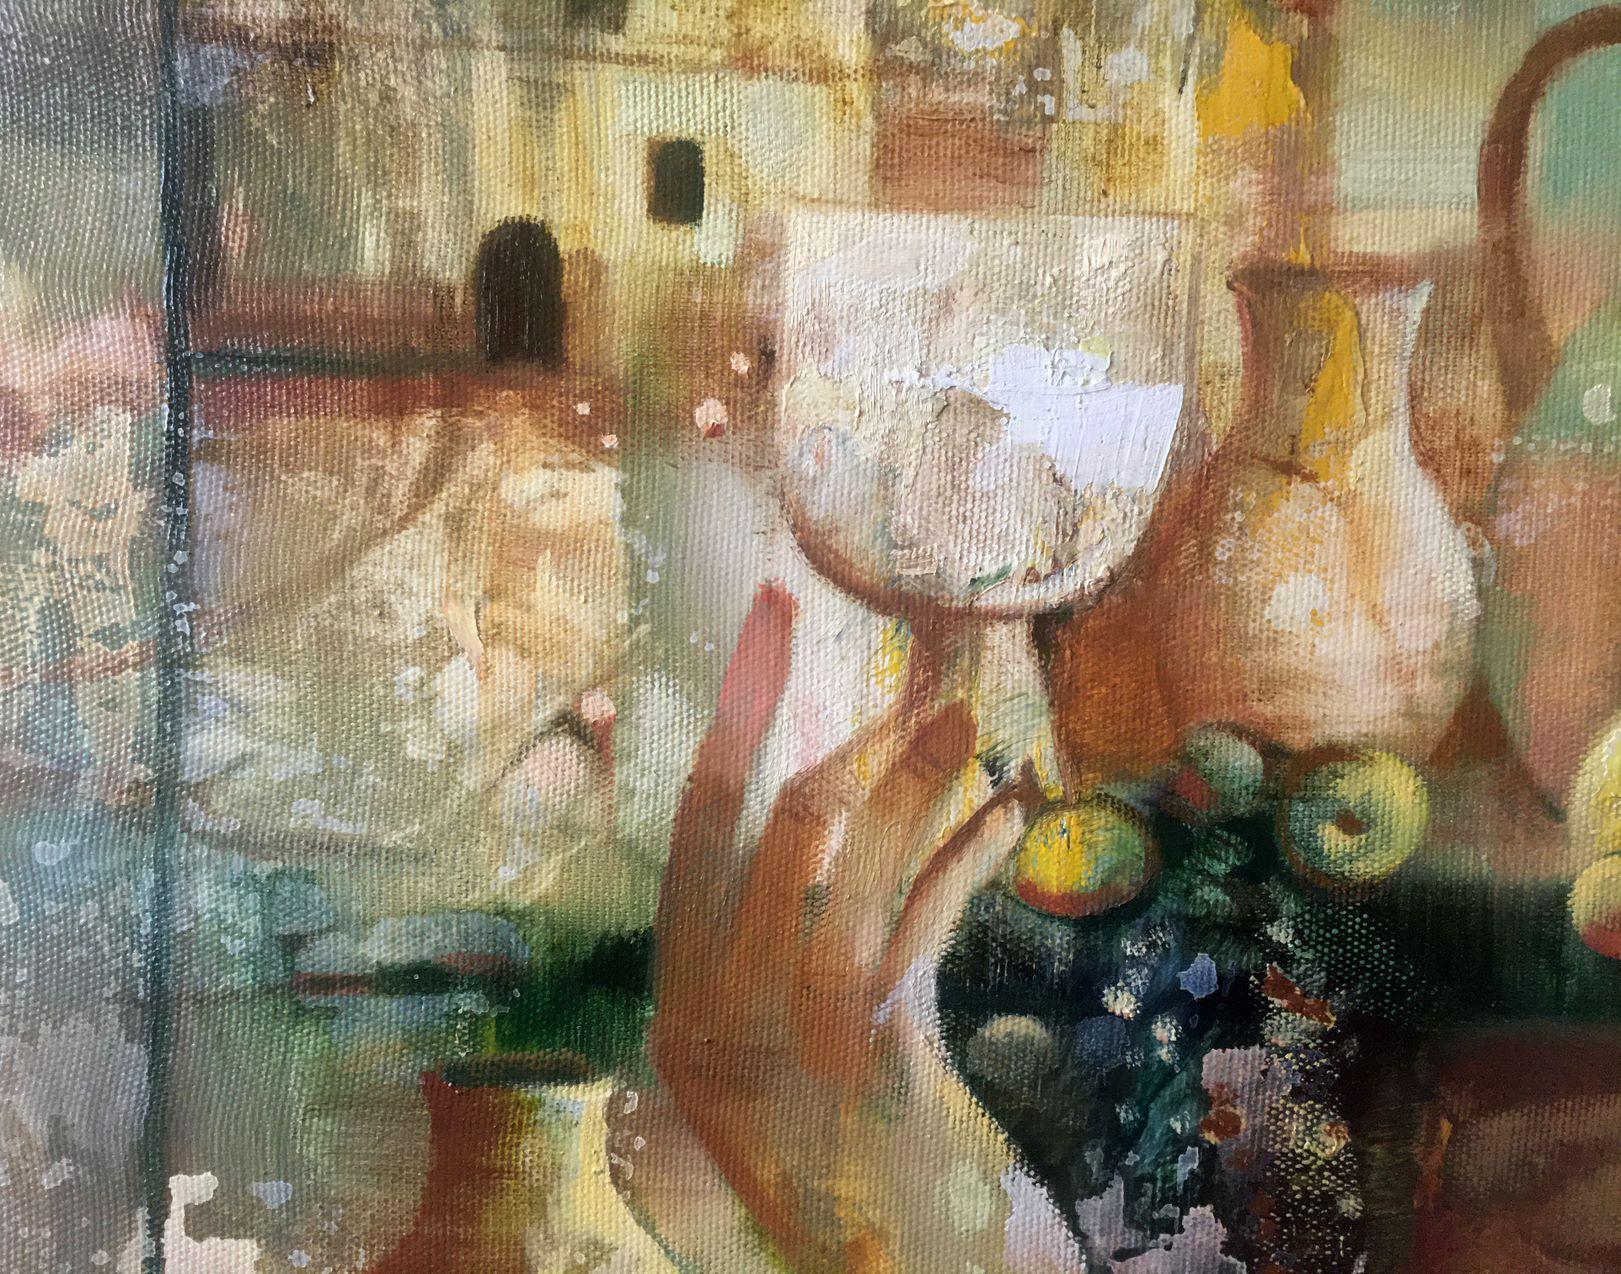 Artist: Anatoly Borisovich Tarabanov
Work: Original oil painting, handmade artwork, one of a kind 
Medium: Oil on Canvas 
Year: 2012
Style: Portrait Surrealism
Title: Water Carrier
Size: 25.5